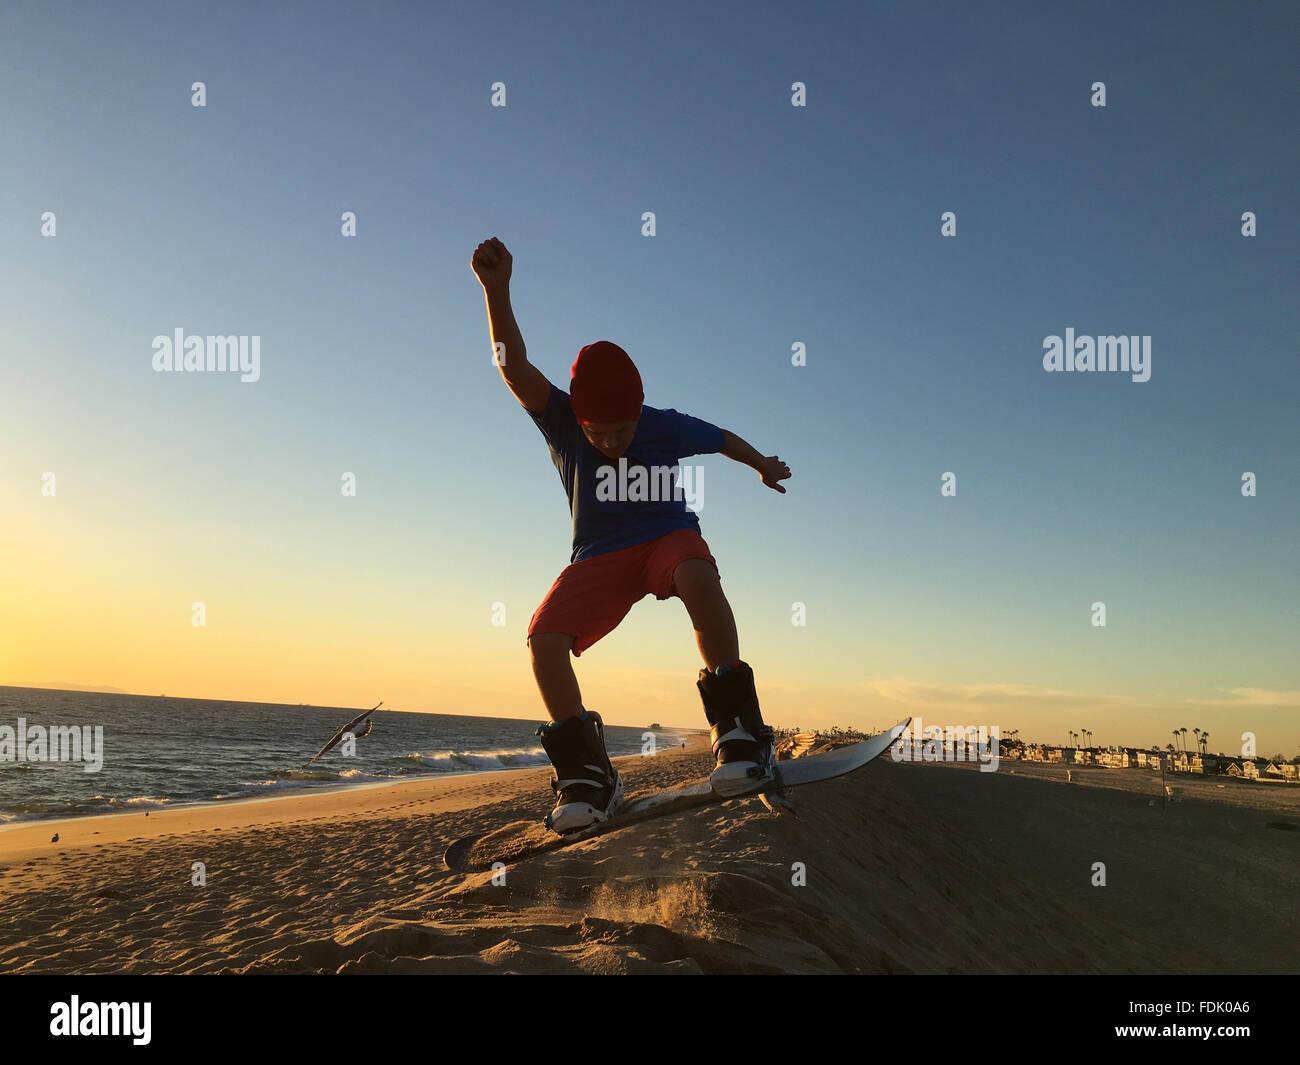 Boy sandboarding on beach Stock Photo